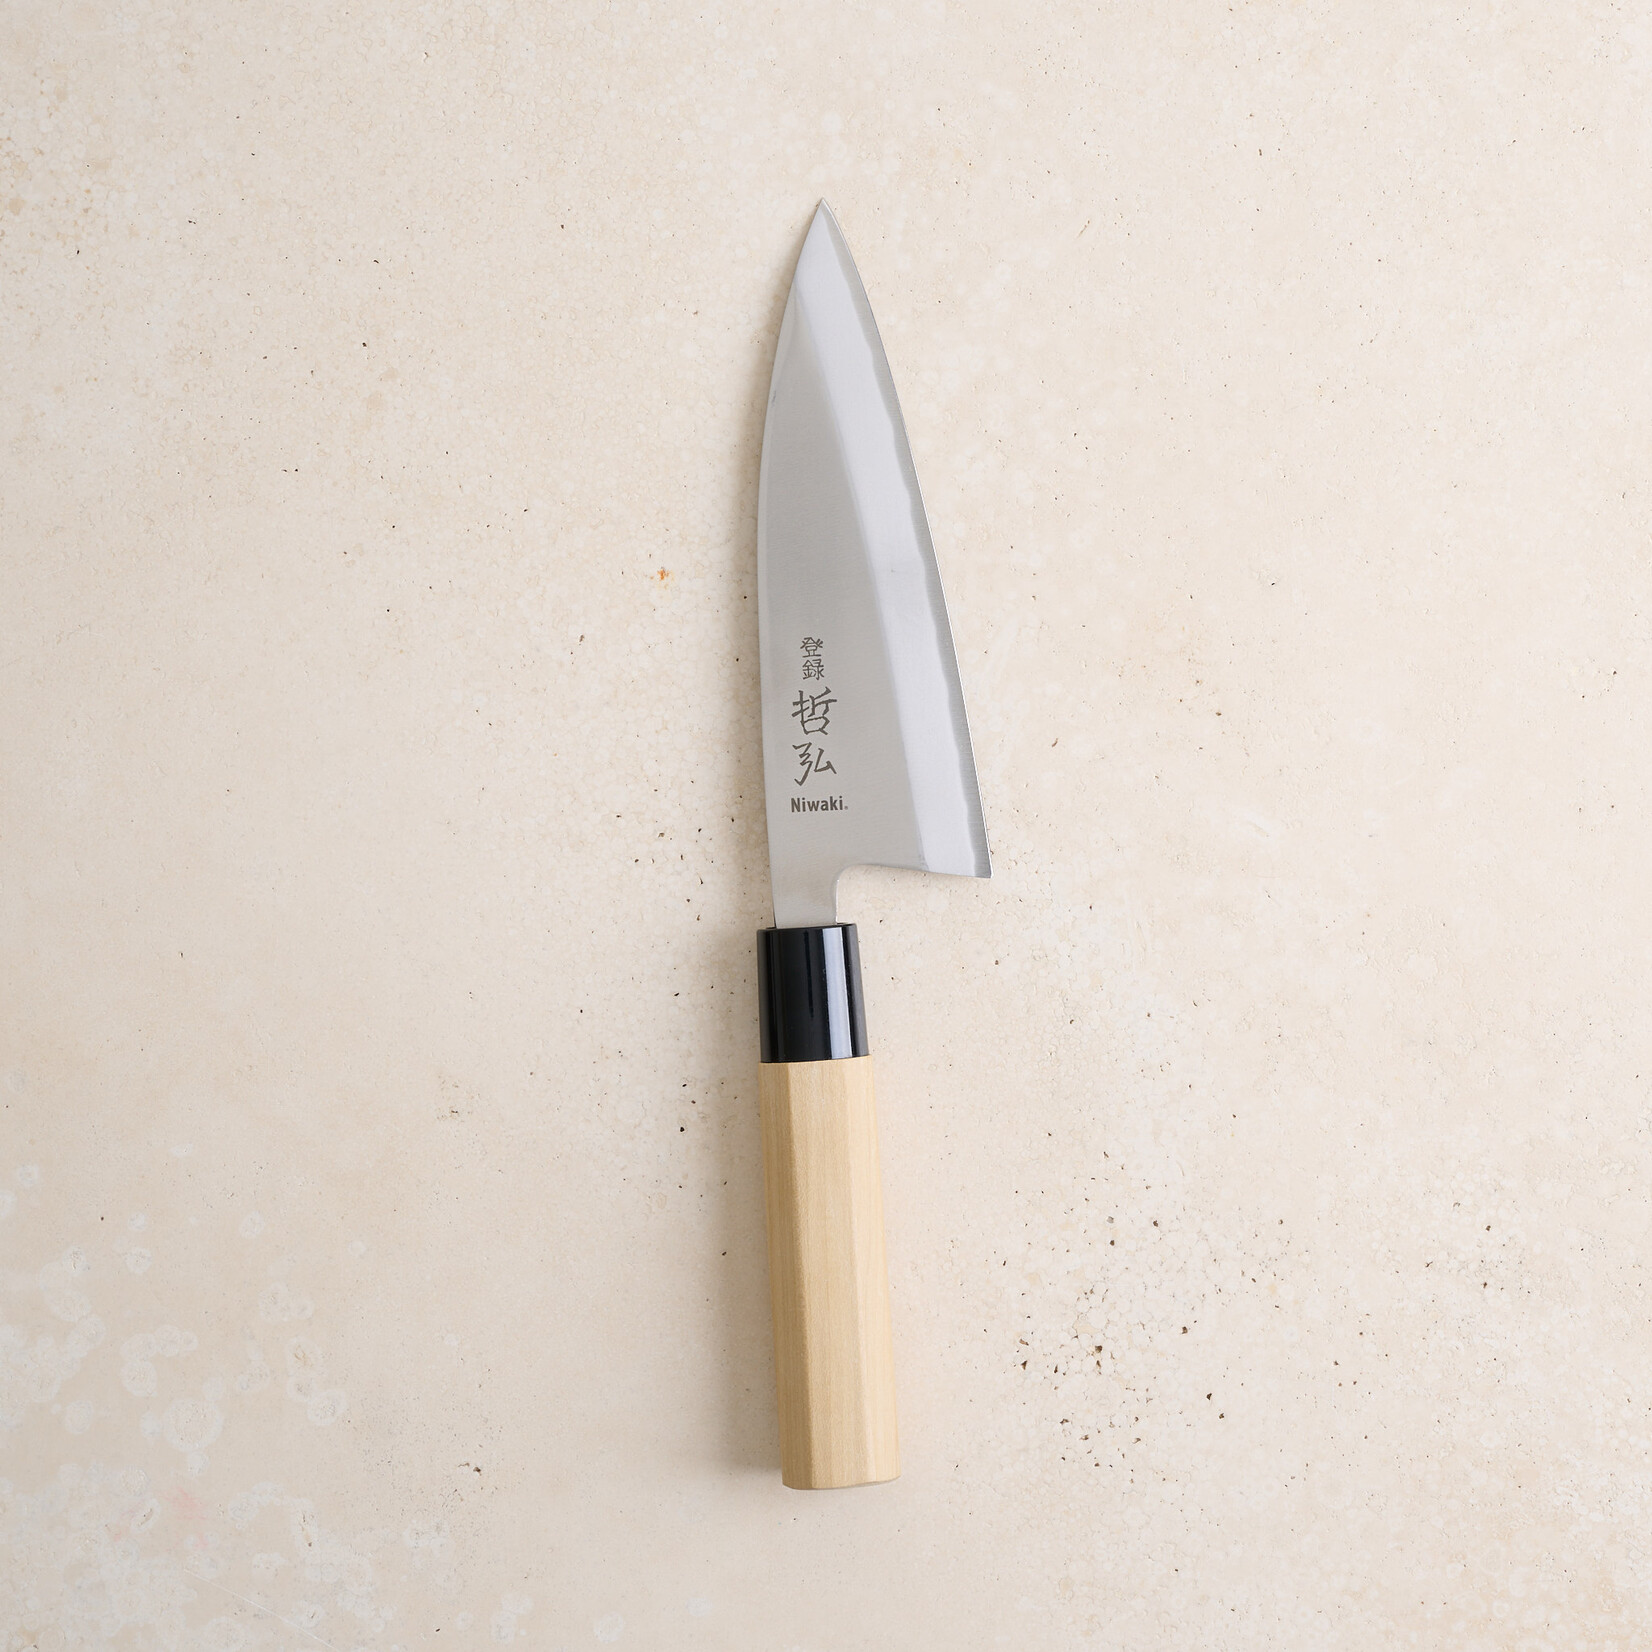 Japanese Style Stainless Steel Kitchen Knife - deba